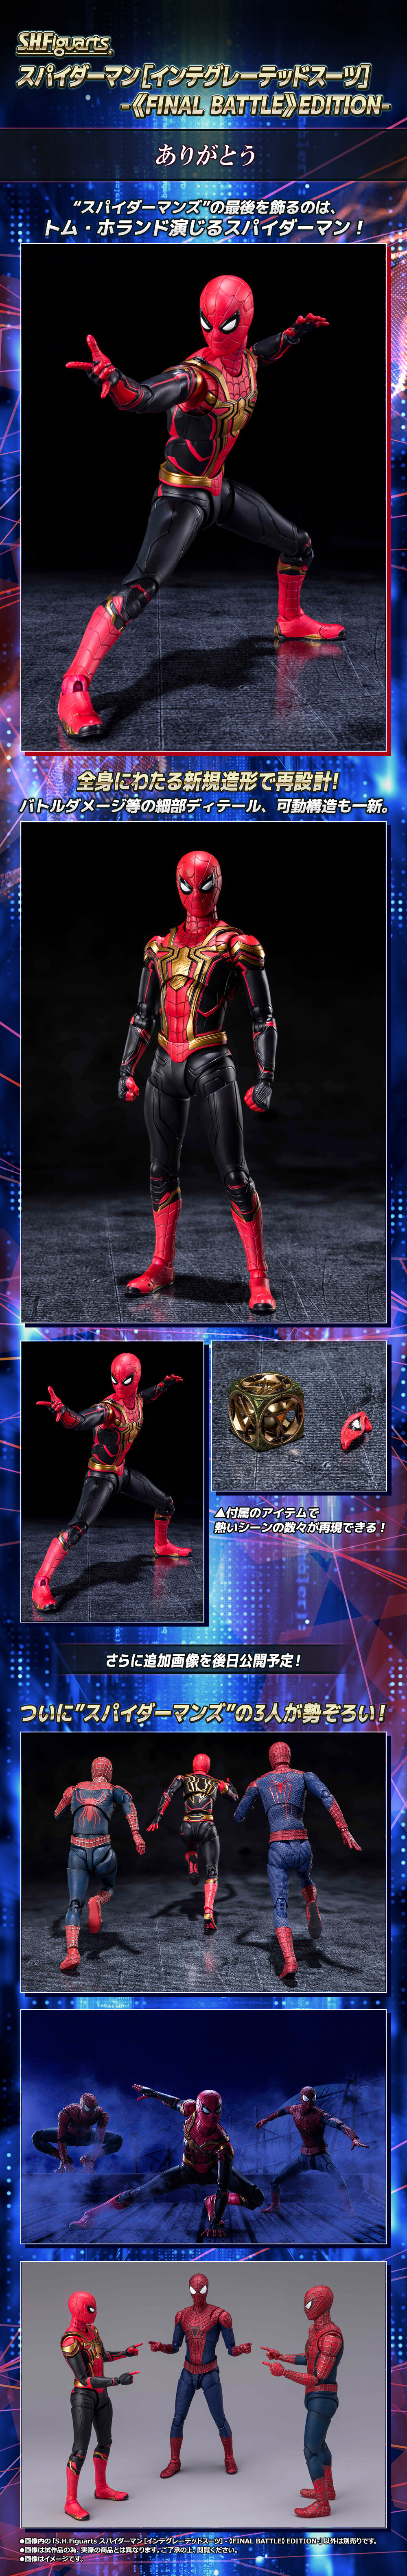 S.H.Figuarts Spider-Man [Integrated Suit] -FINAL BATTLE EDITION- Action  Figure